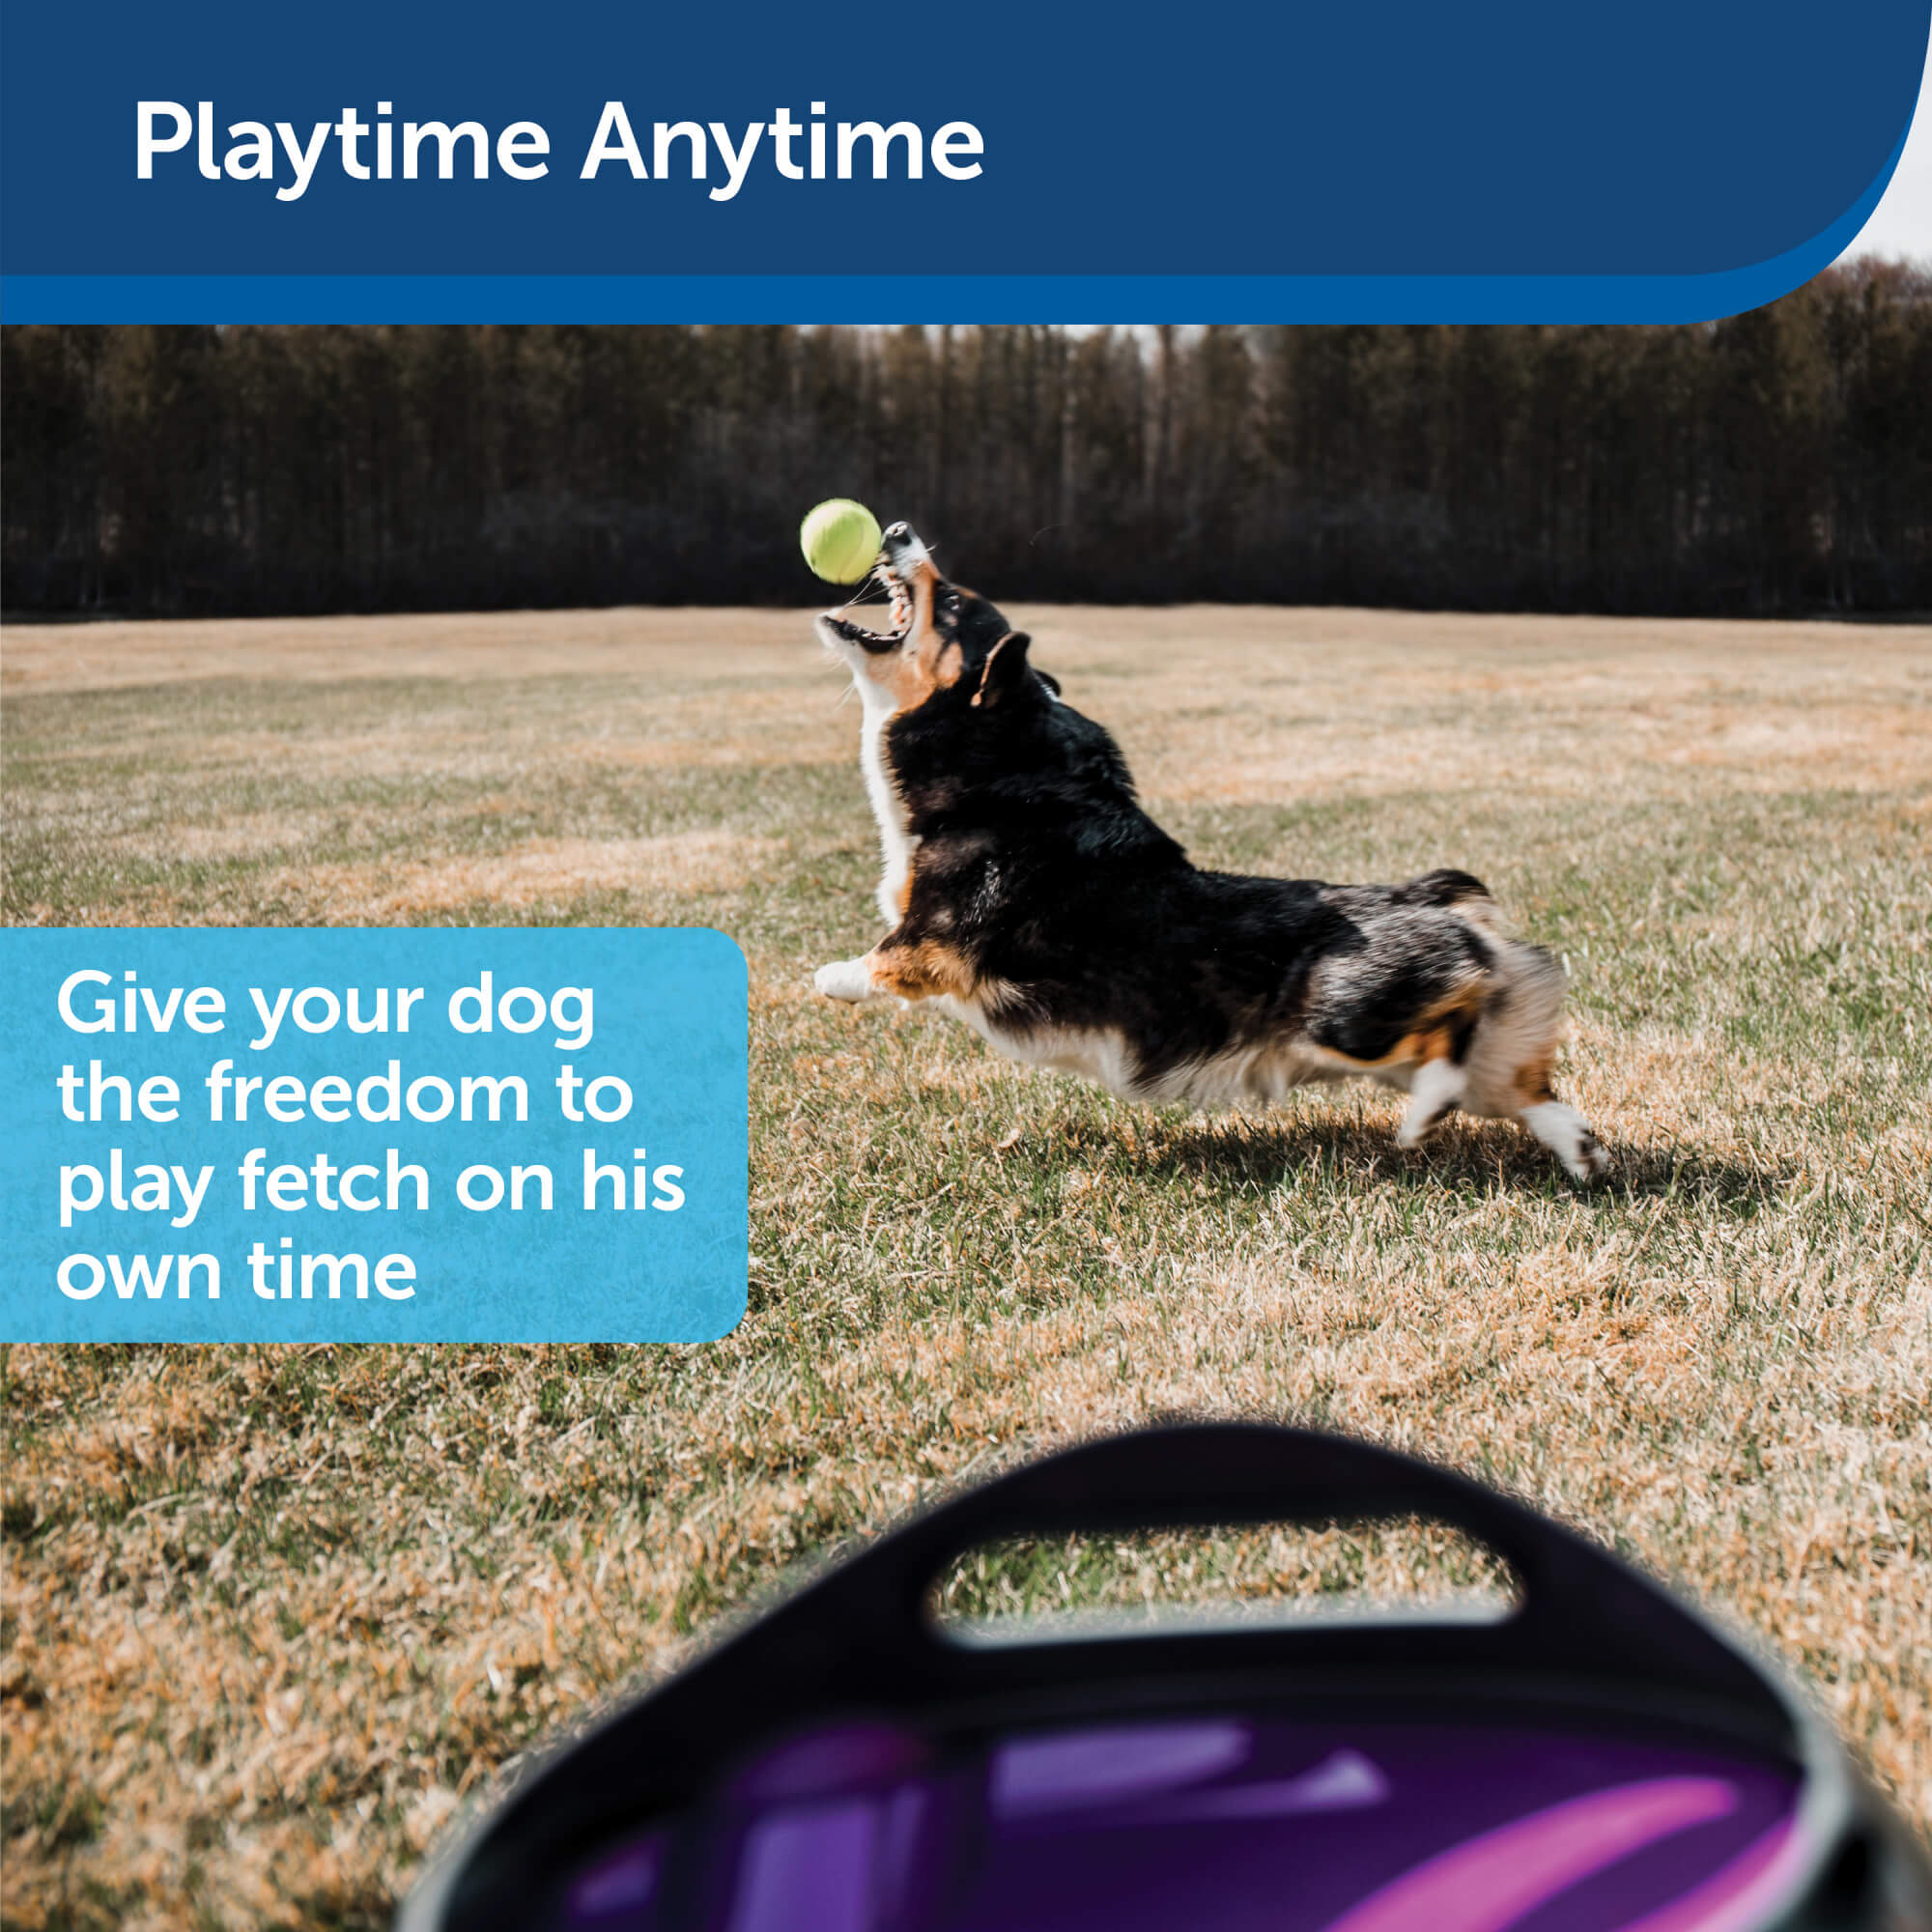 Playtime anywhere